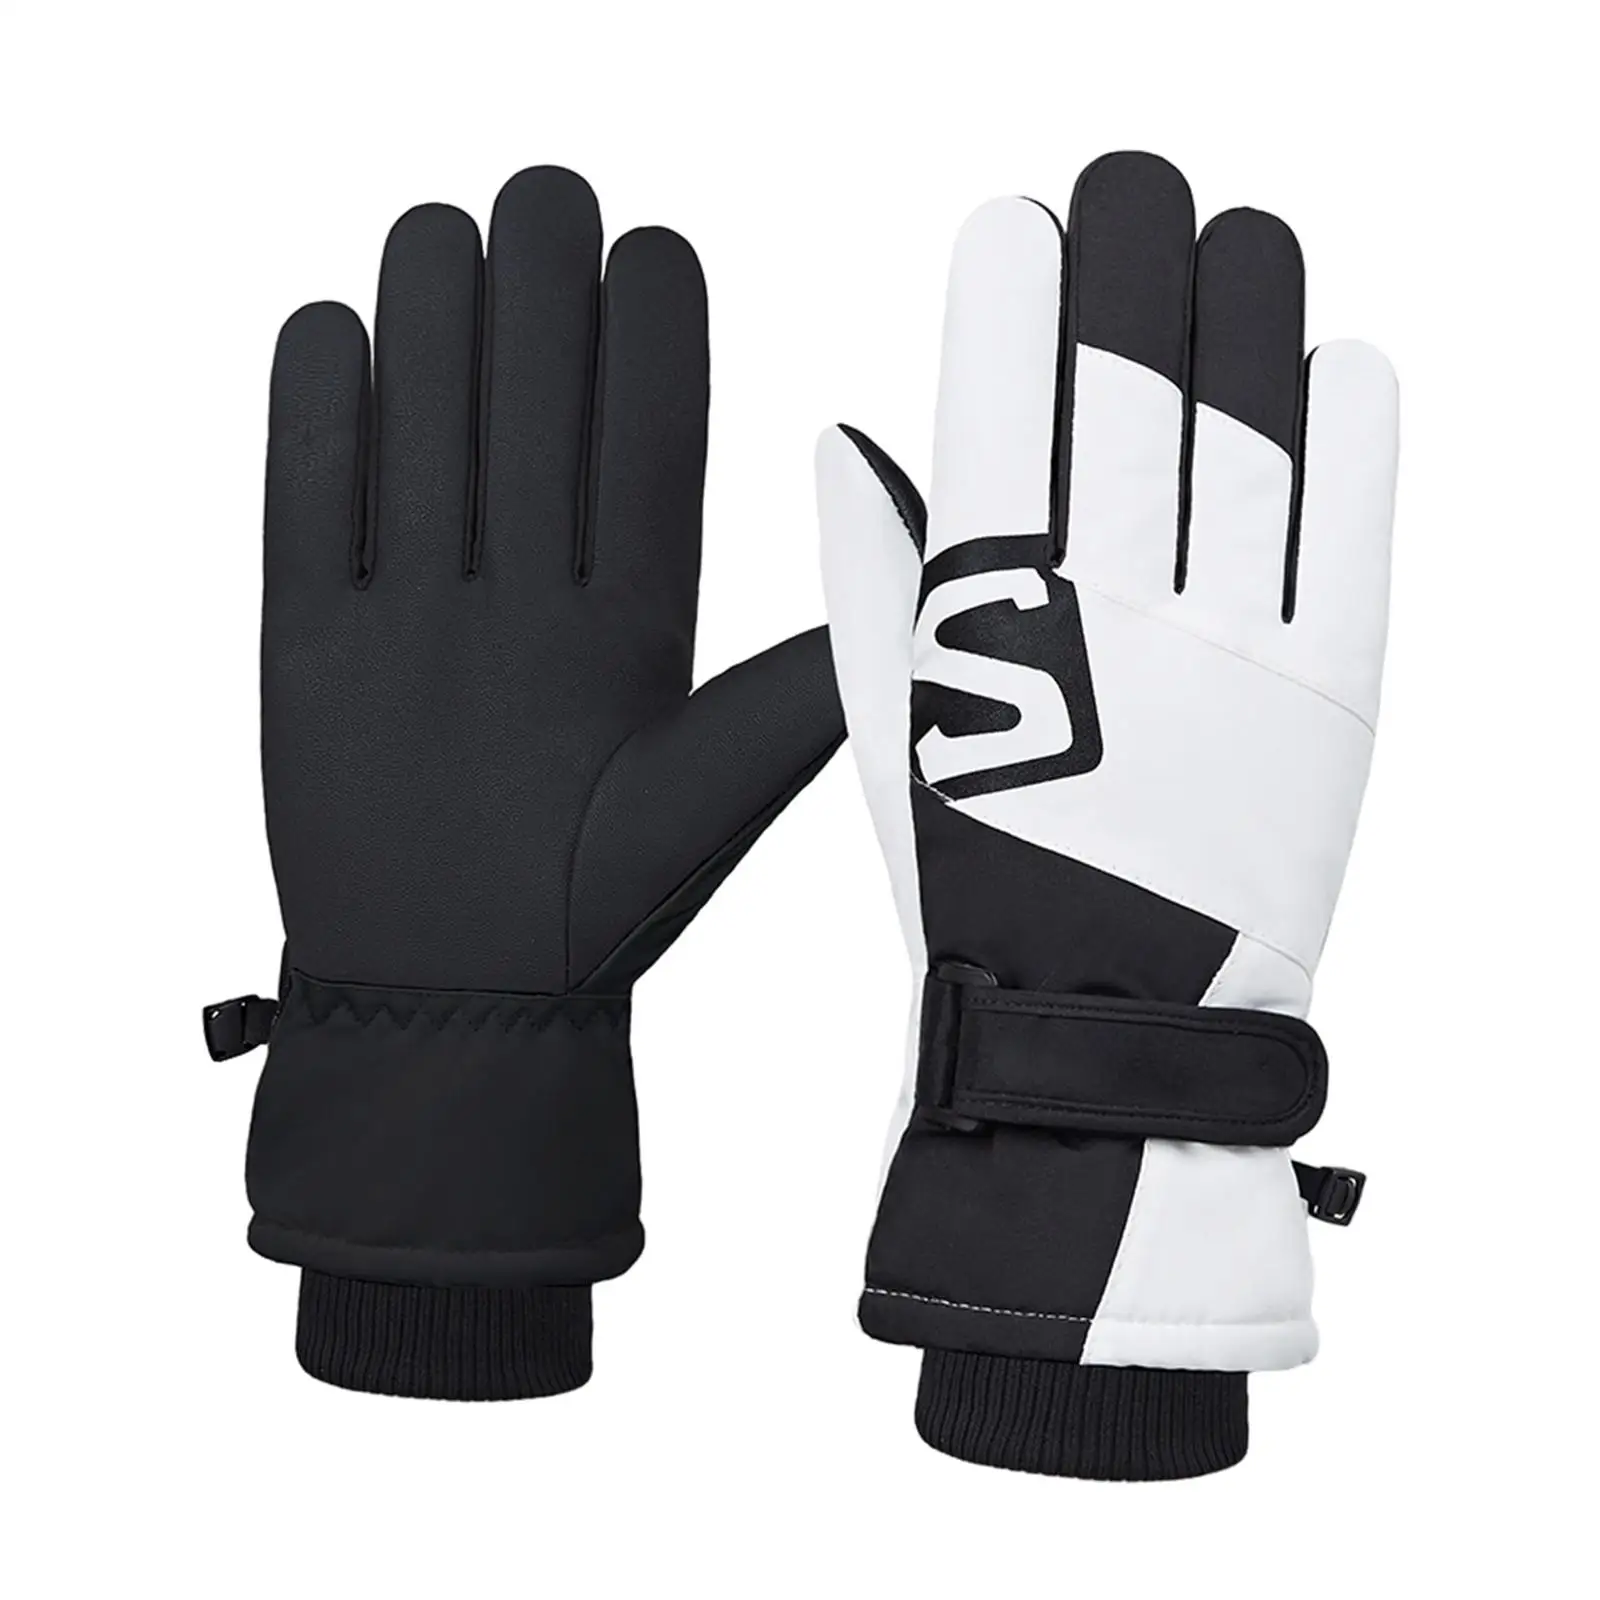 Winter Ski Gloves Snow Ski Gloves, Touchscreen Mittens Gift Warm Mittens Thickened Gloves, for Snow Driving Outdoor Biking